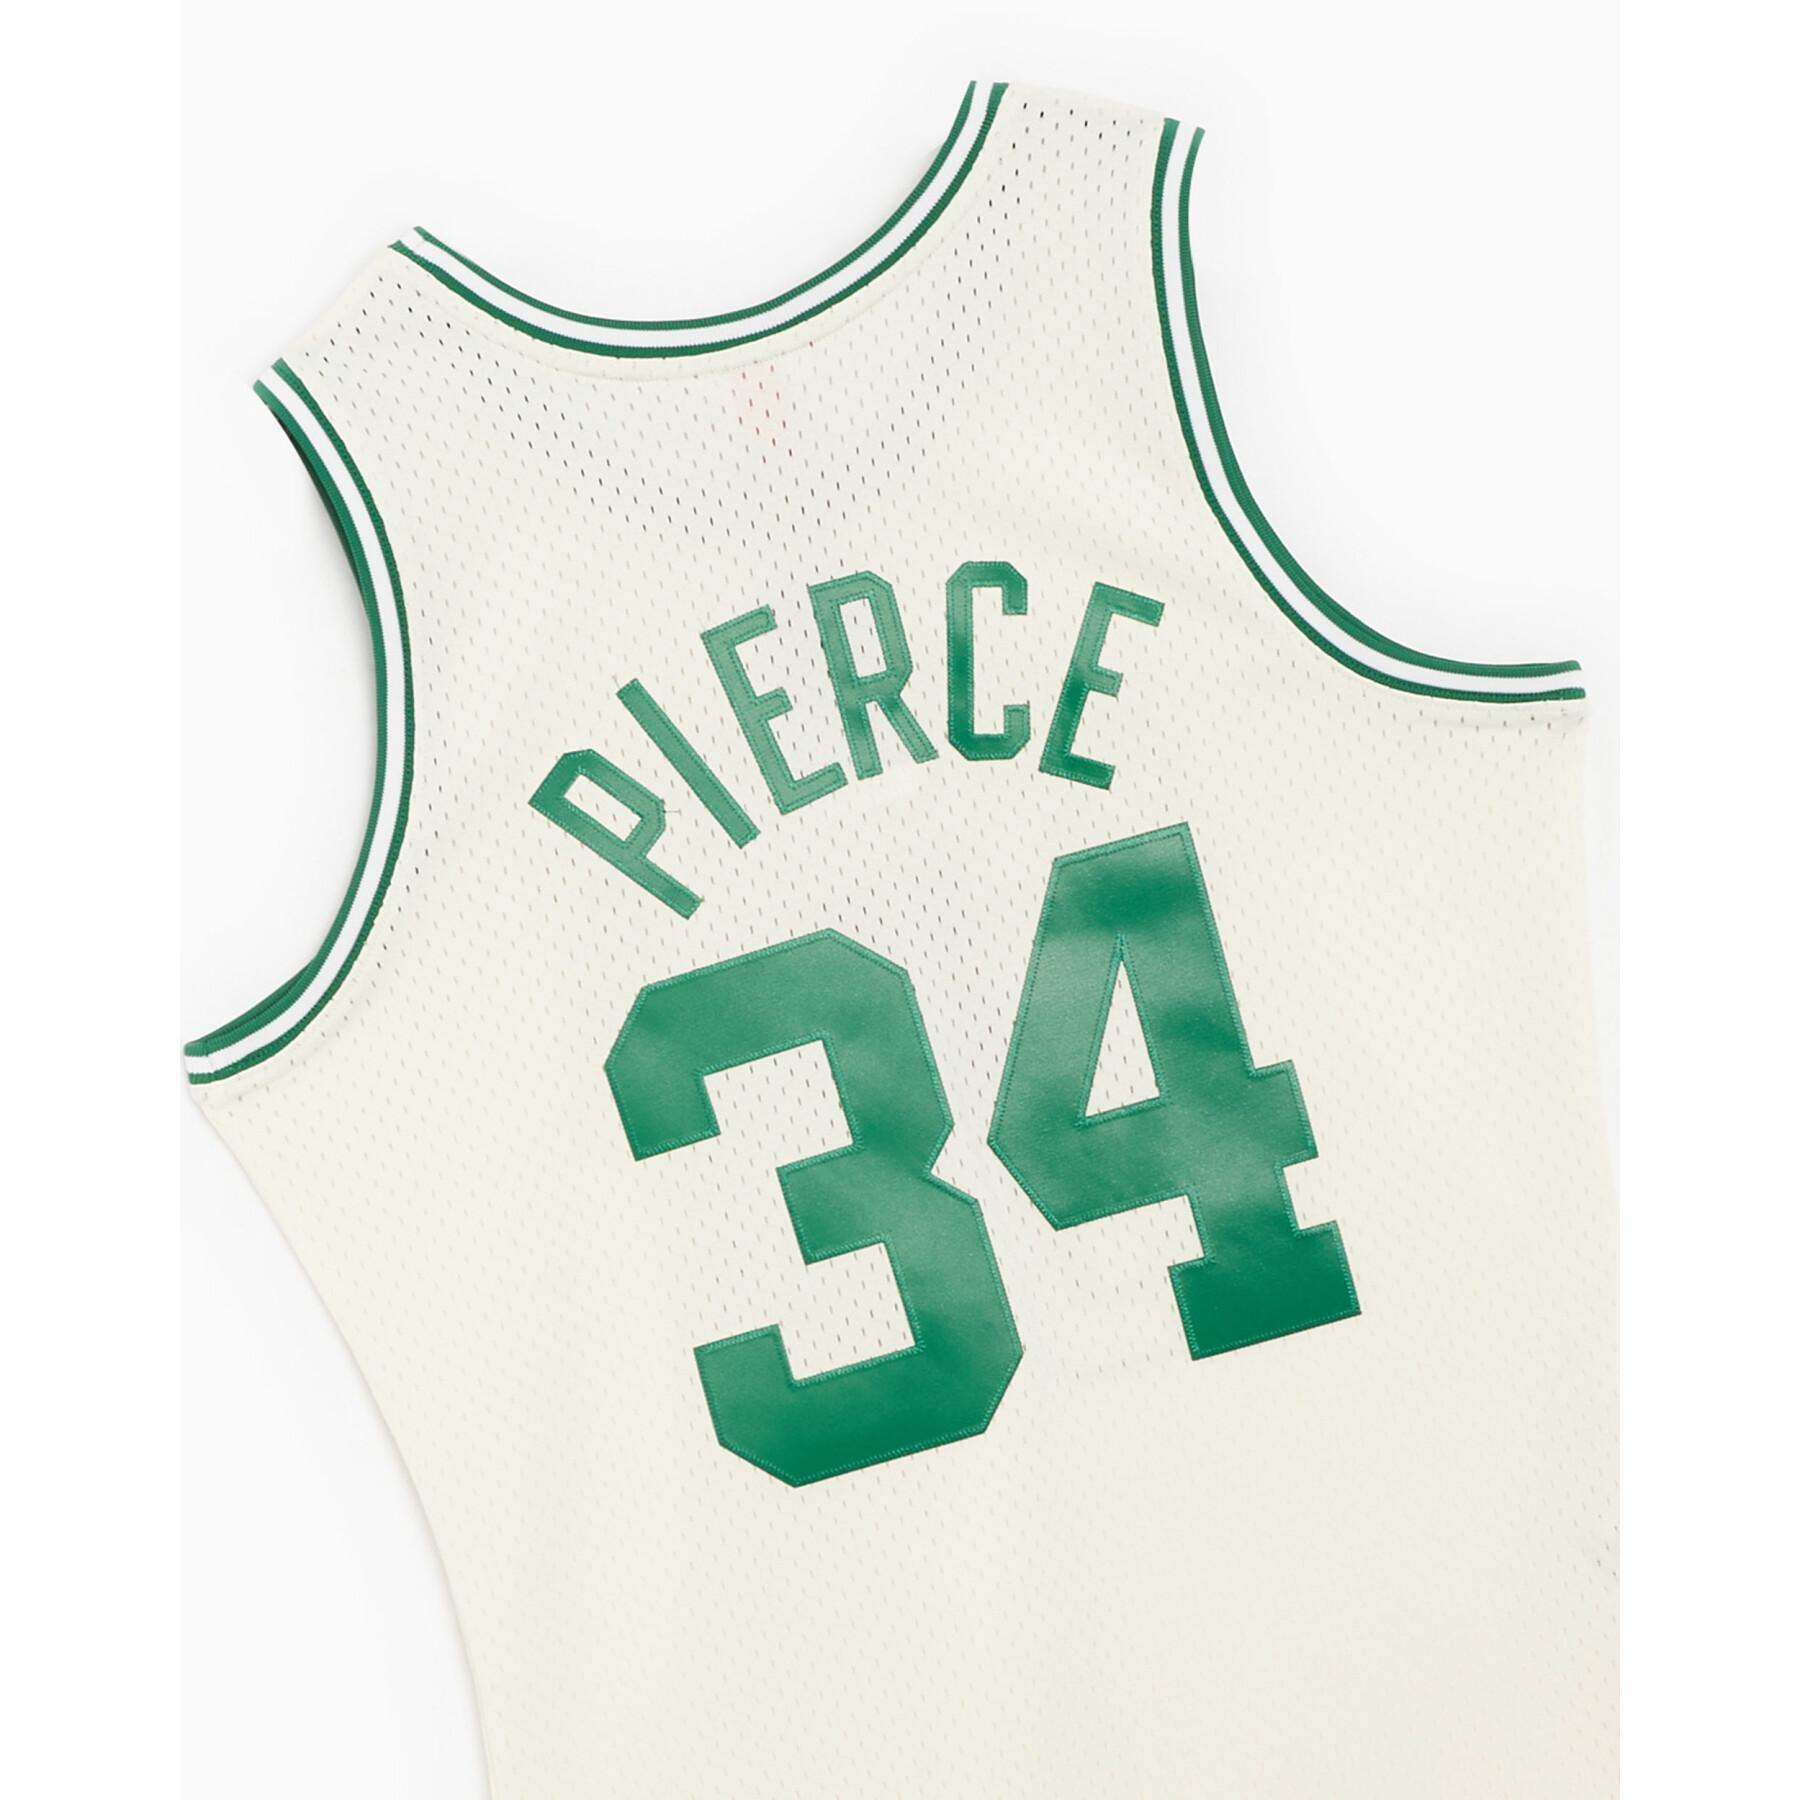 Jersey Boston Celtics Paul Pierce NBA 2007